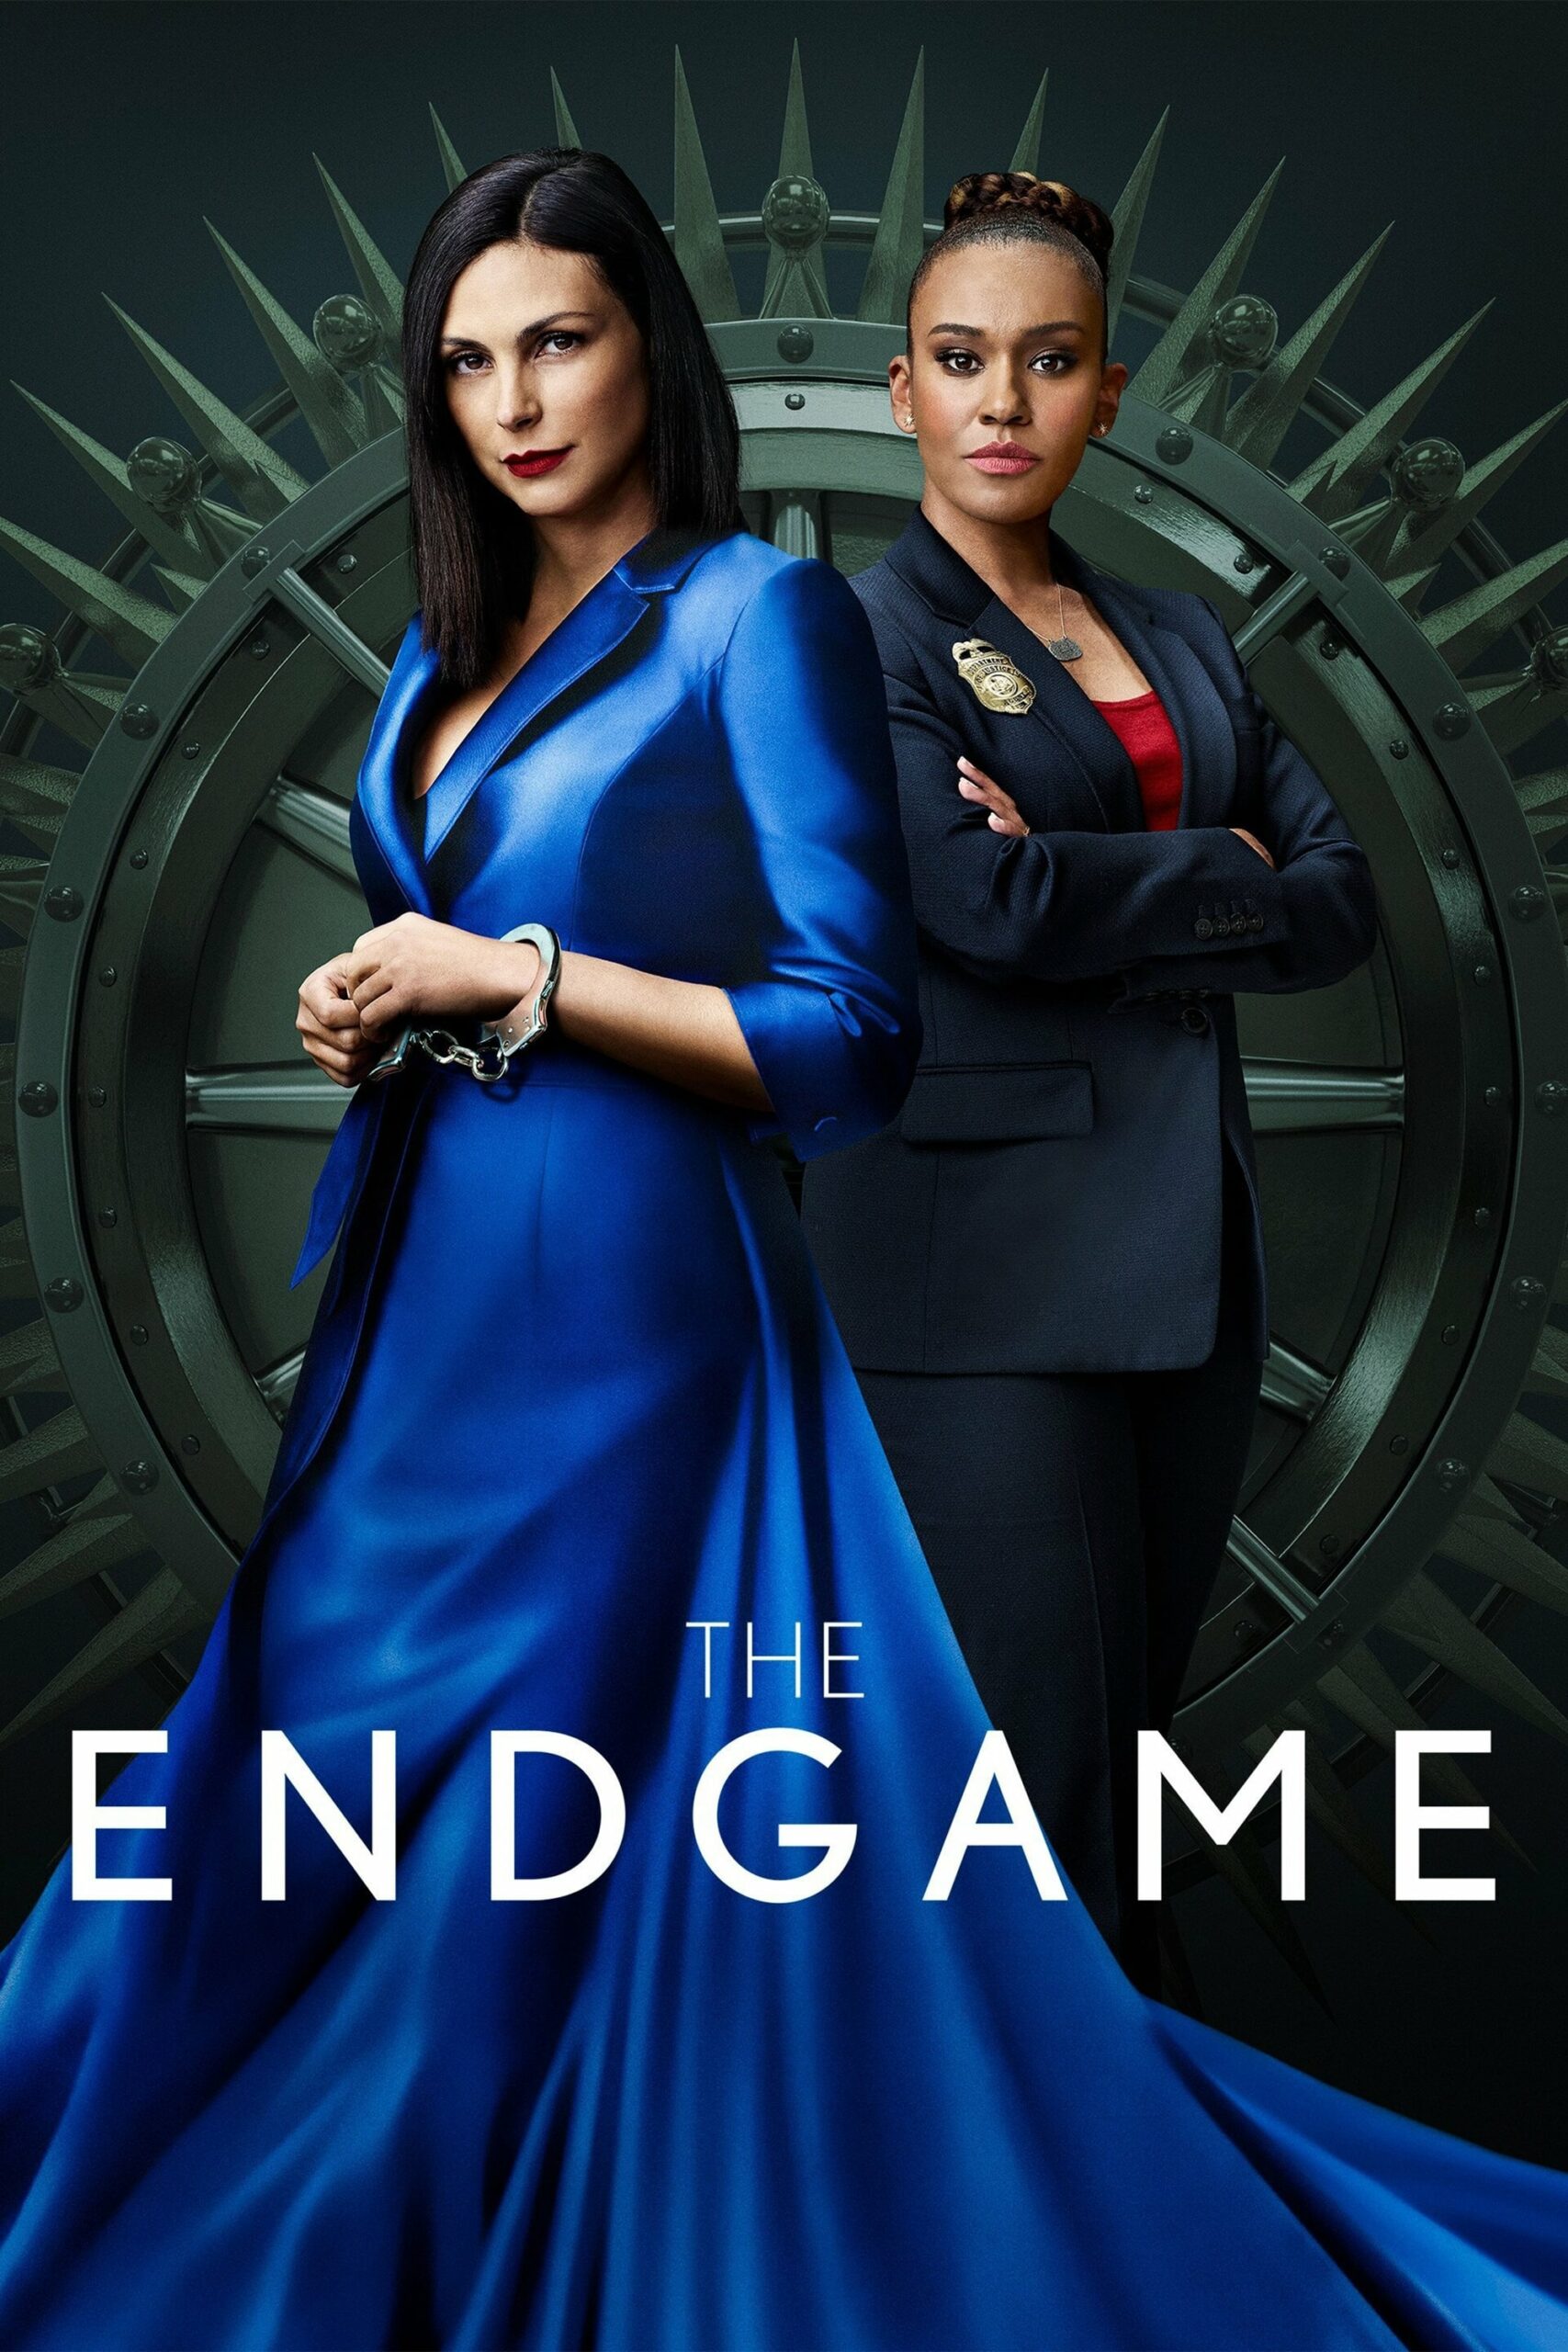 Plakát pro film “The Endgame”